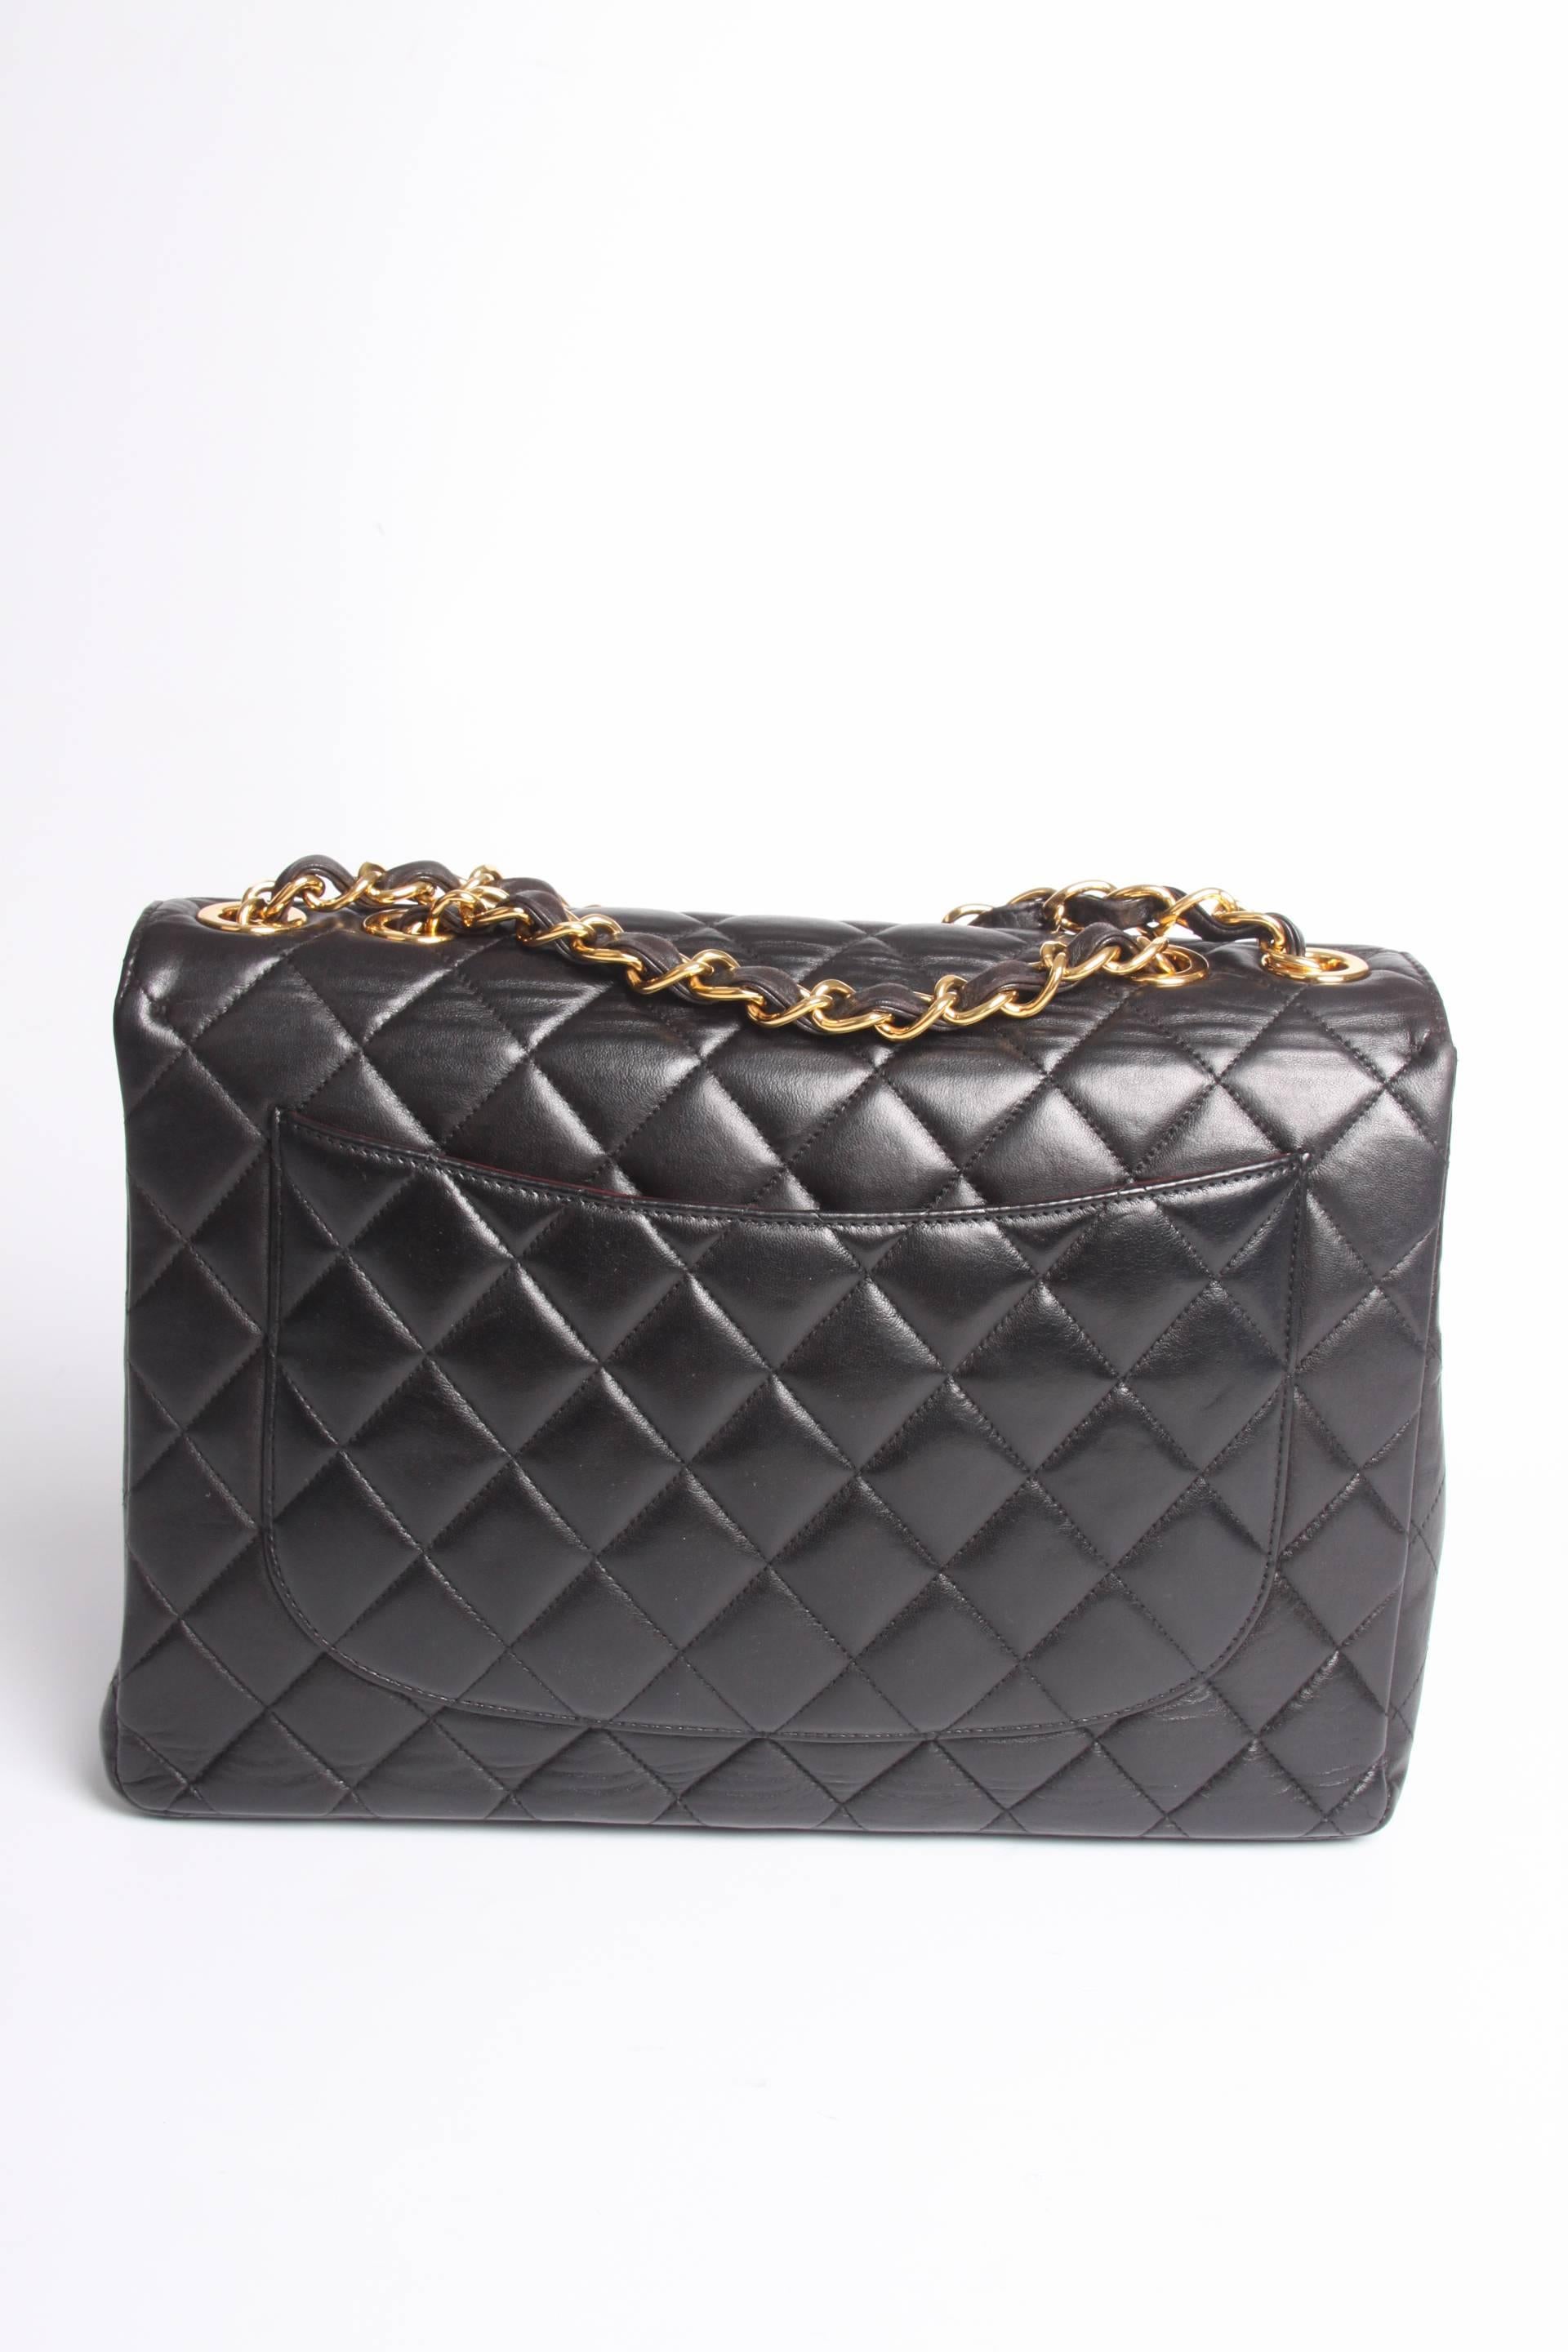  Chanel 2.55 Timeless Jumbo Flap Bag - black leather 1997 3